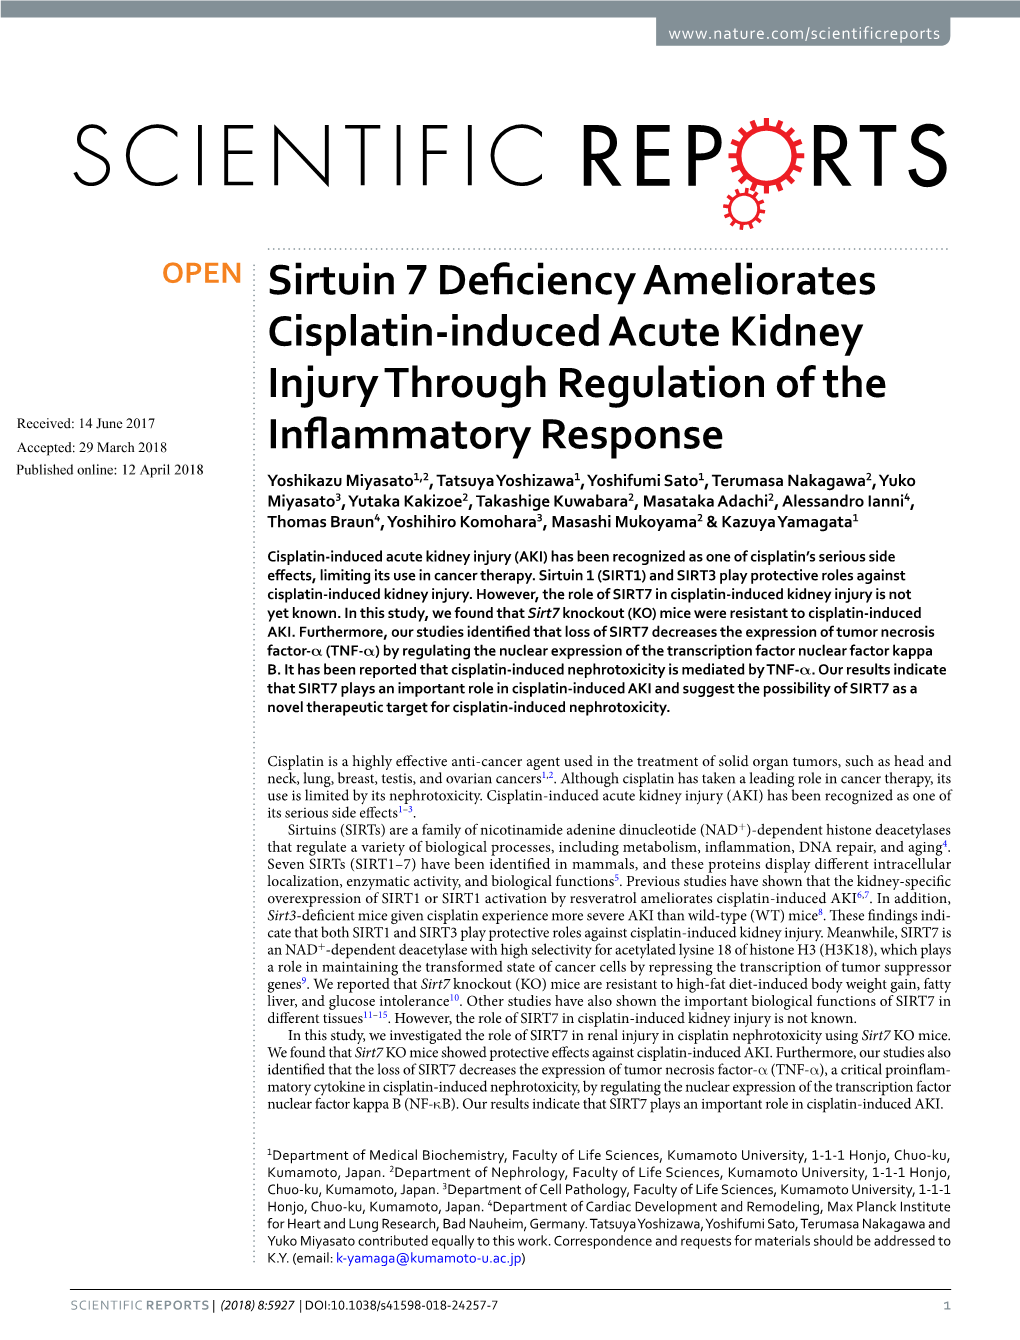 Sirtuin 7 Deficiency Ameliorates Cisplatin-Induced Acute Kidney